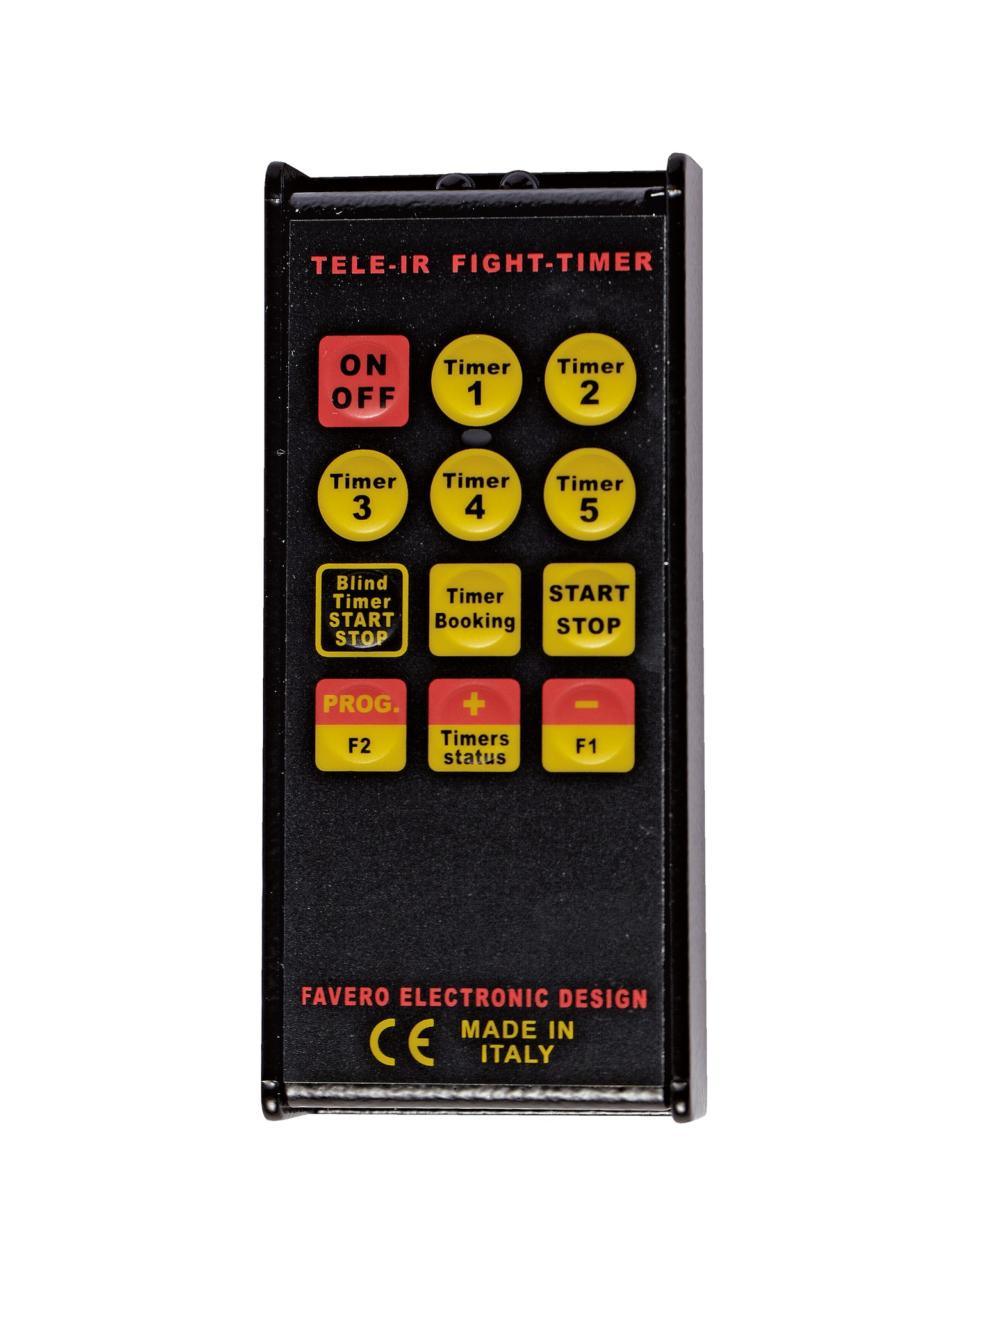 telecommande-fight-timer